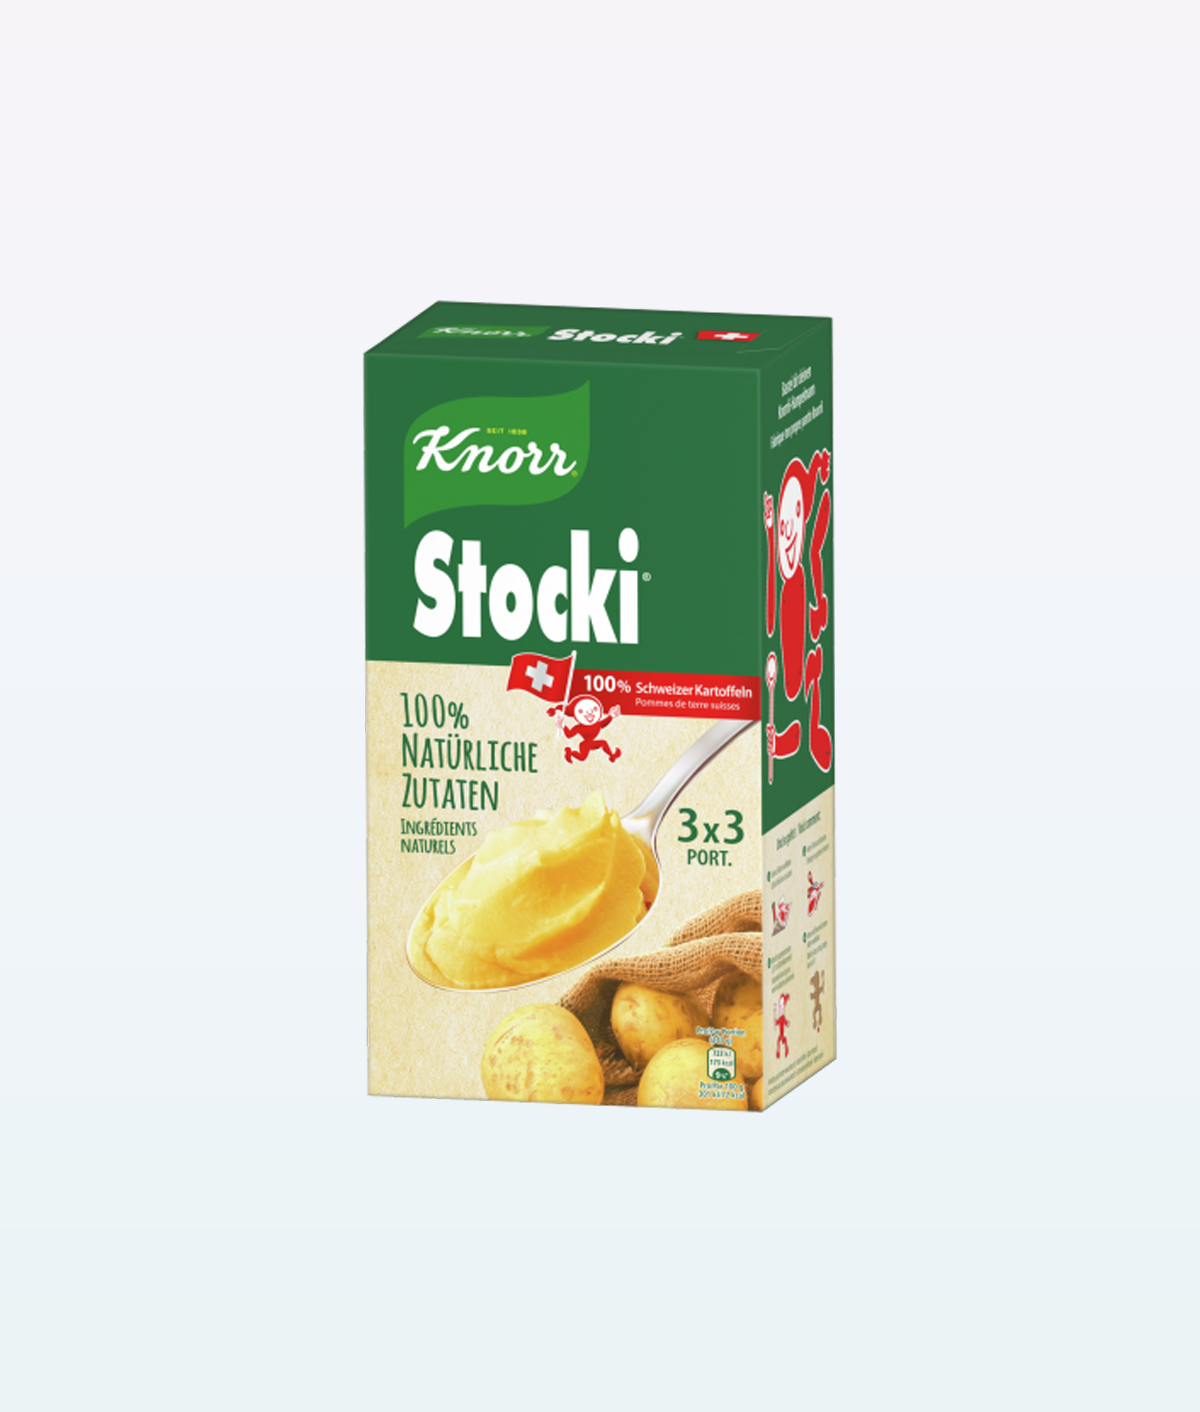 knorr-stocki-potato